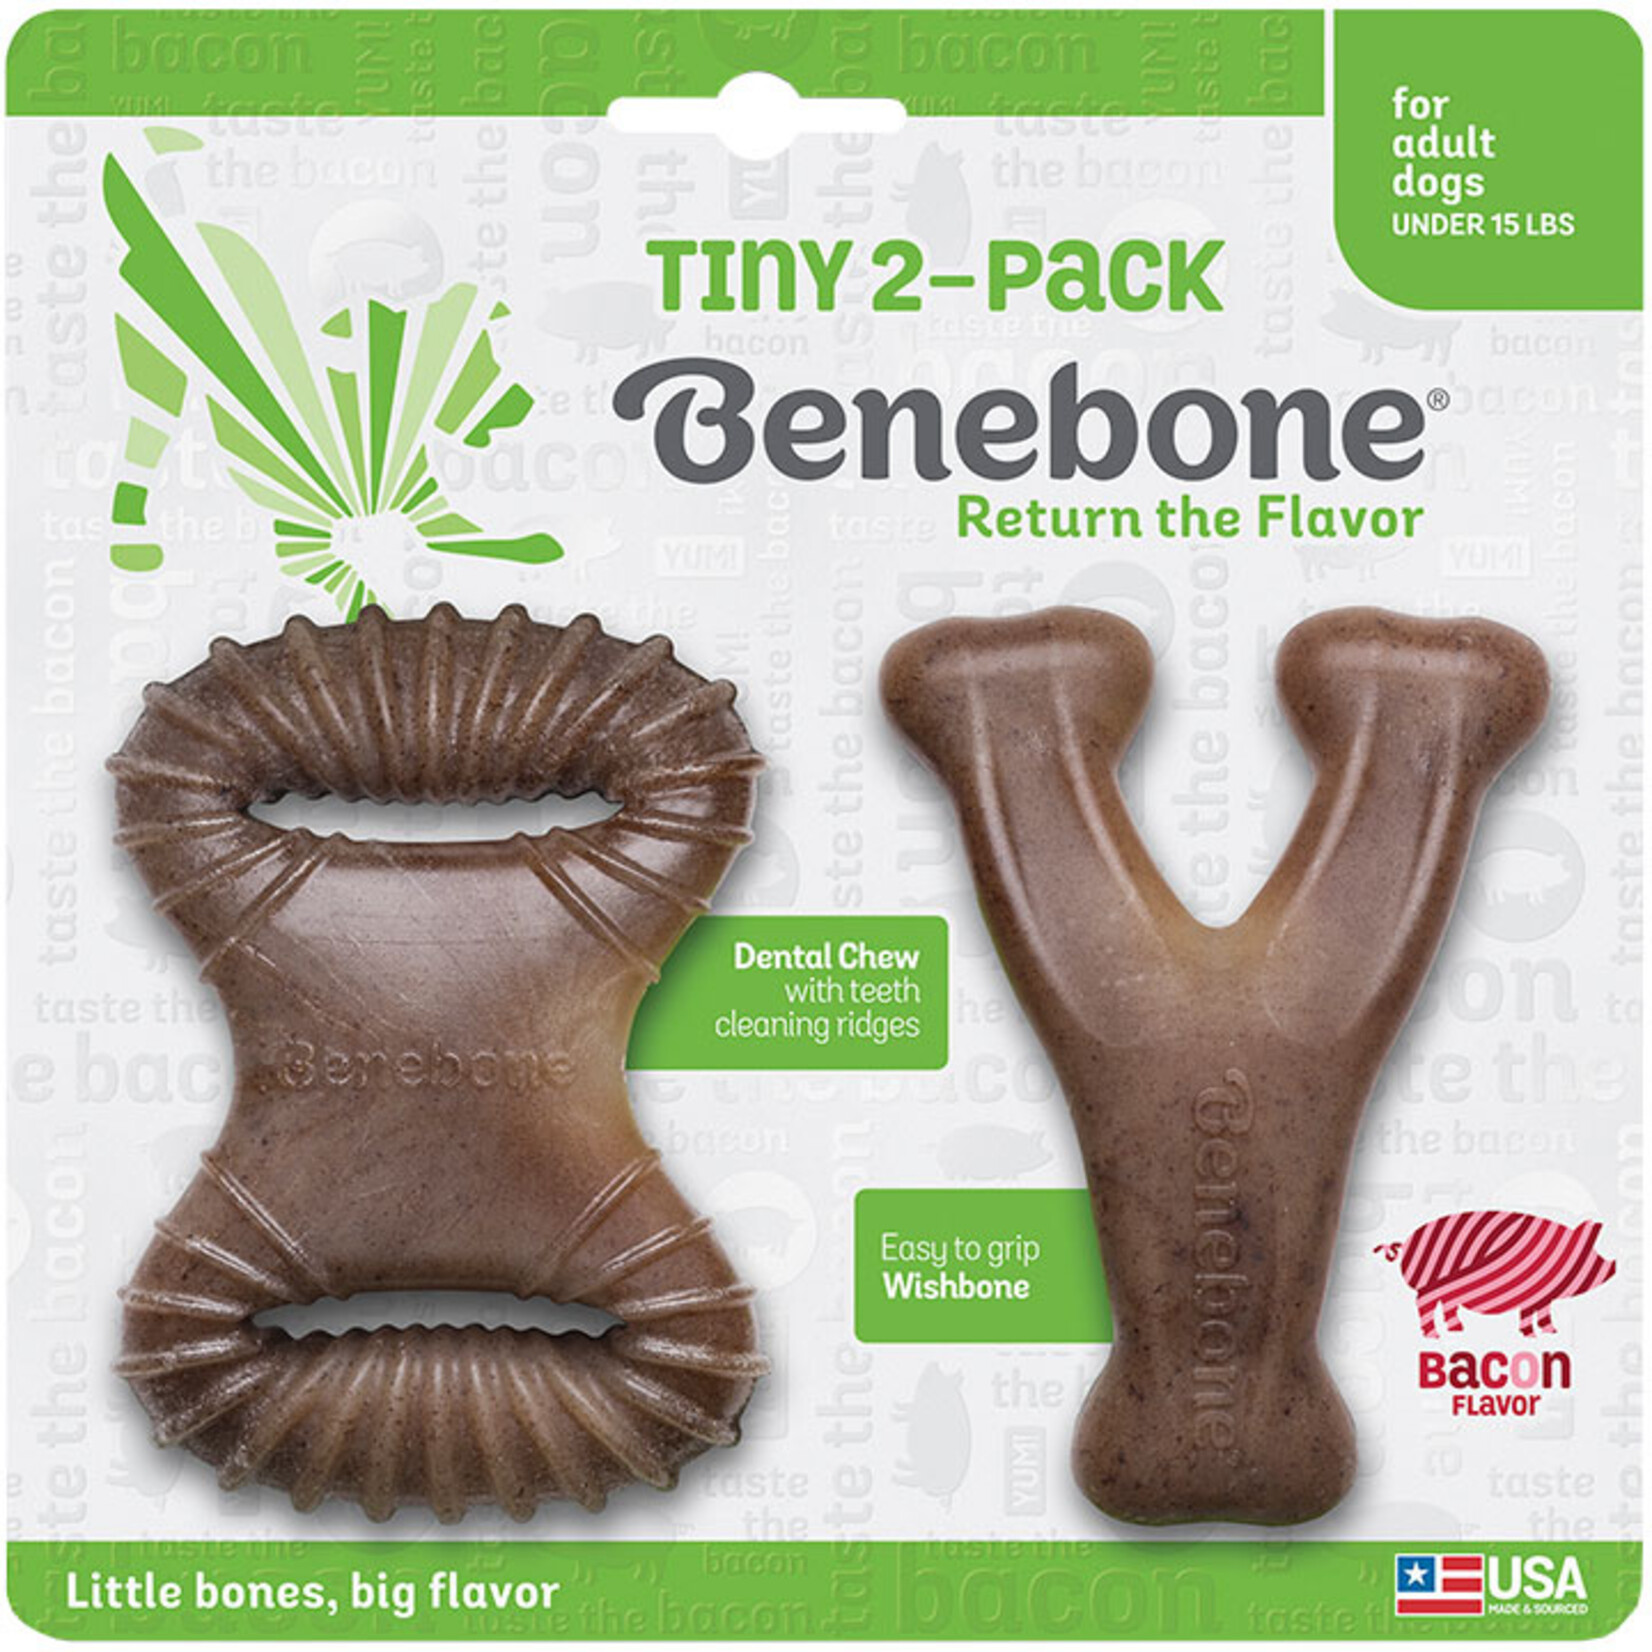 Benebone Tiny 2-Pack Dental & Wishbone Dog Chew Toys